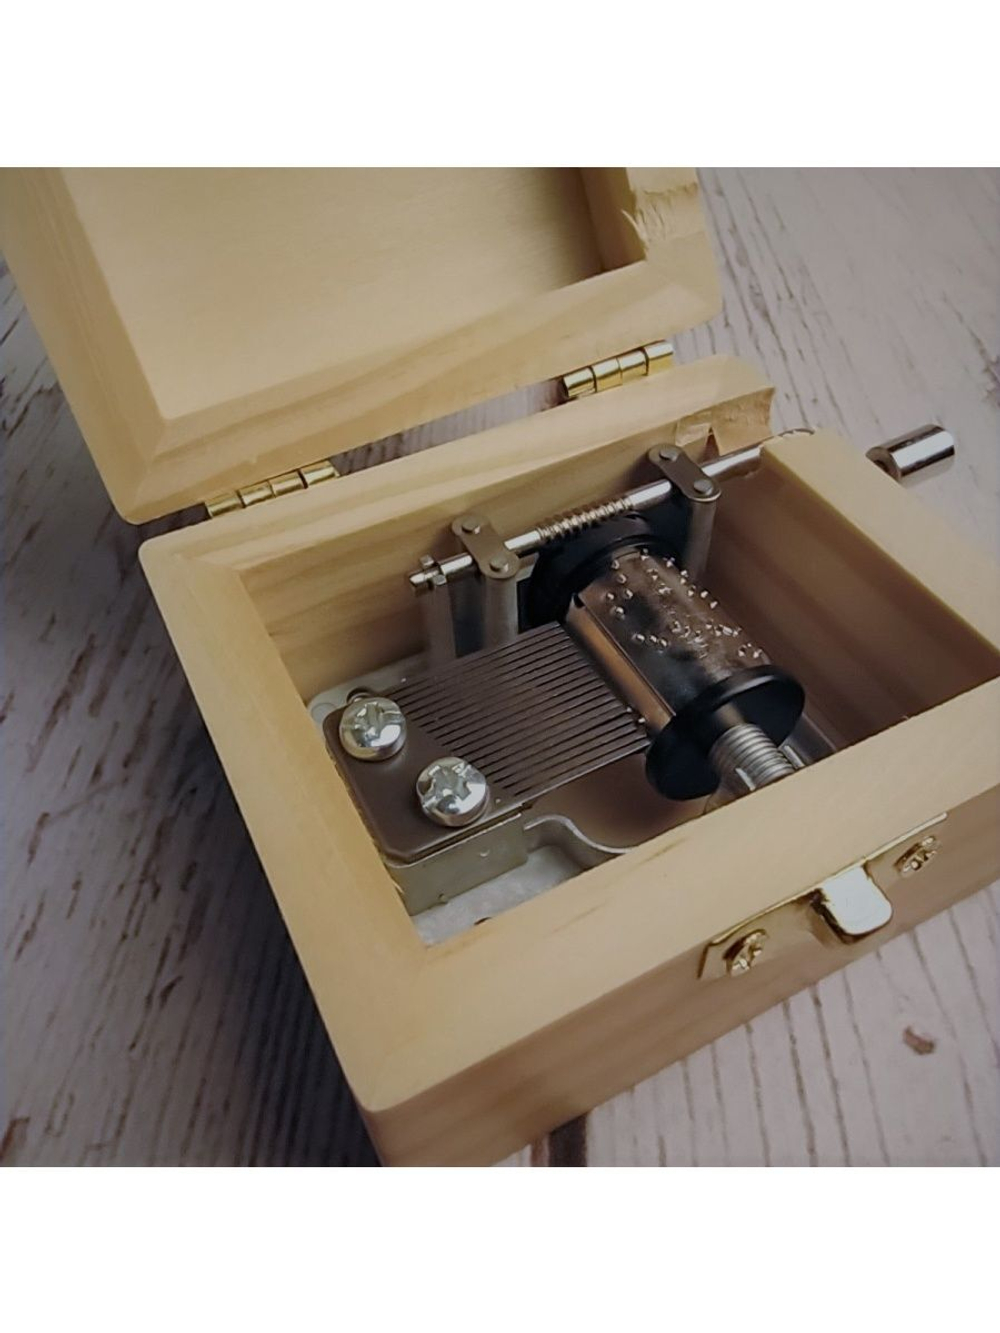 Музыкальная деревянная шкатулка Music Box